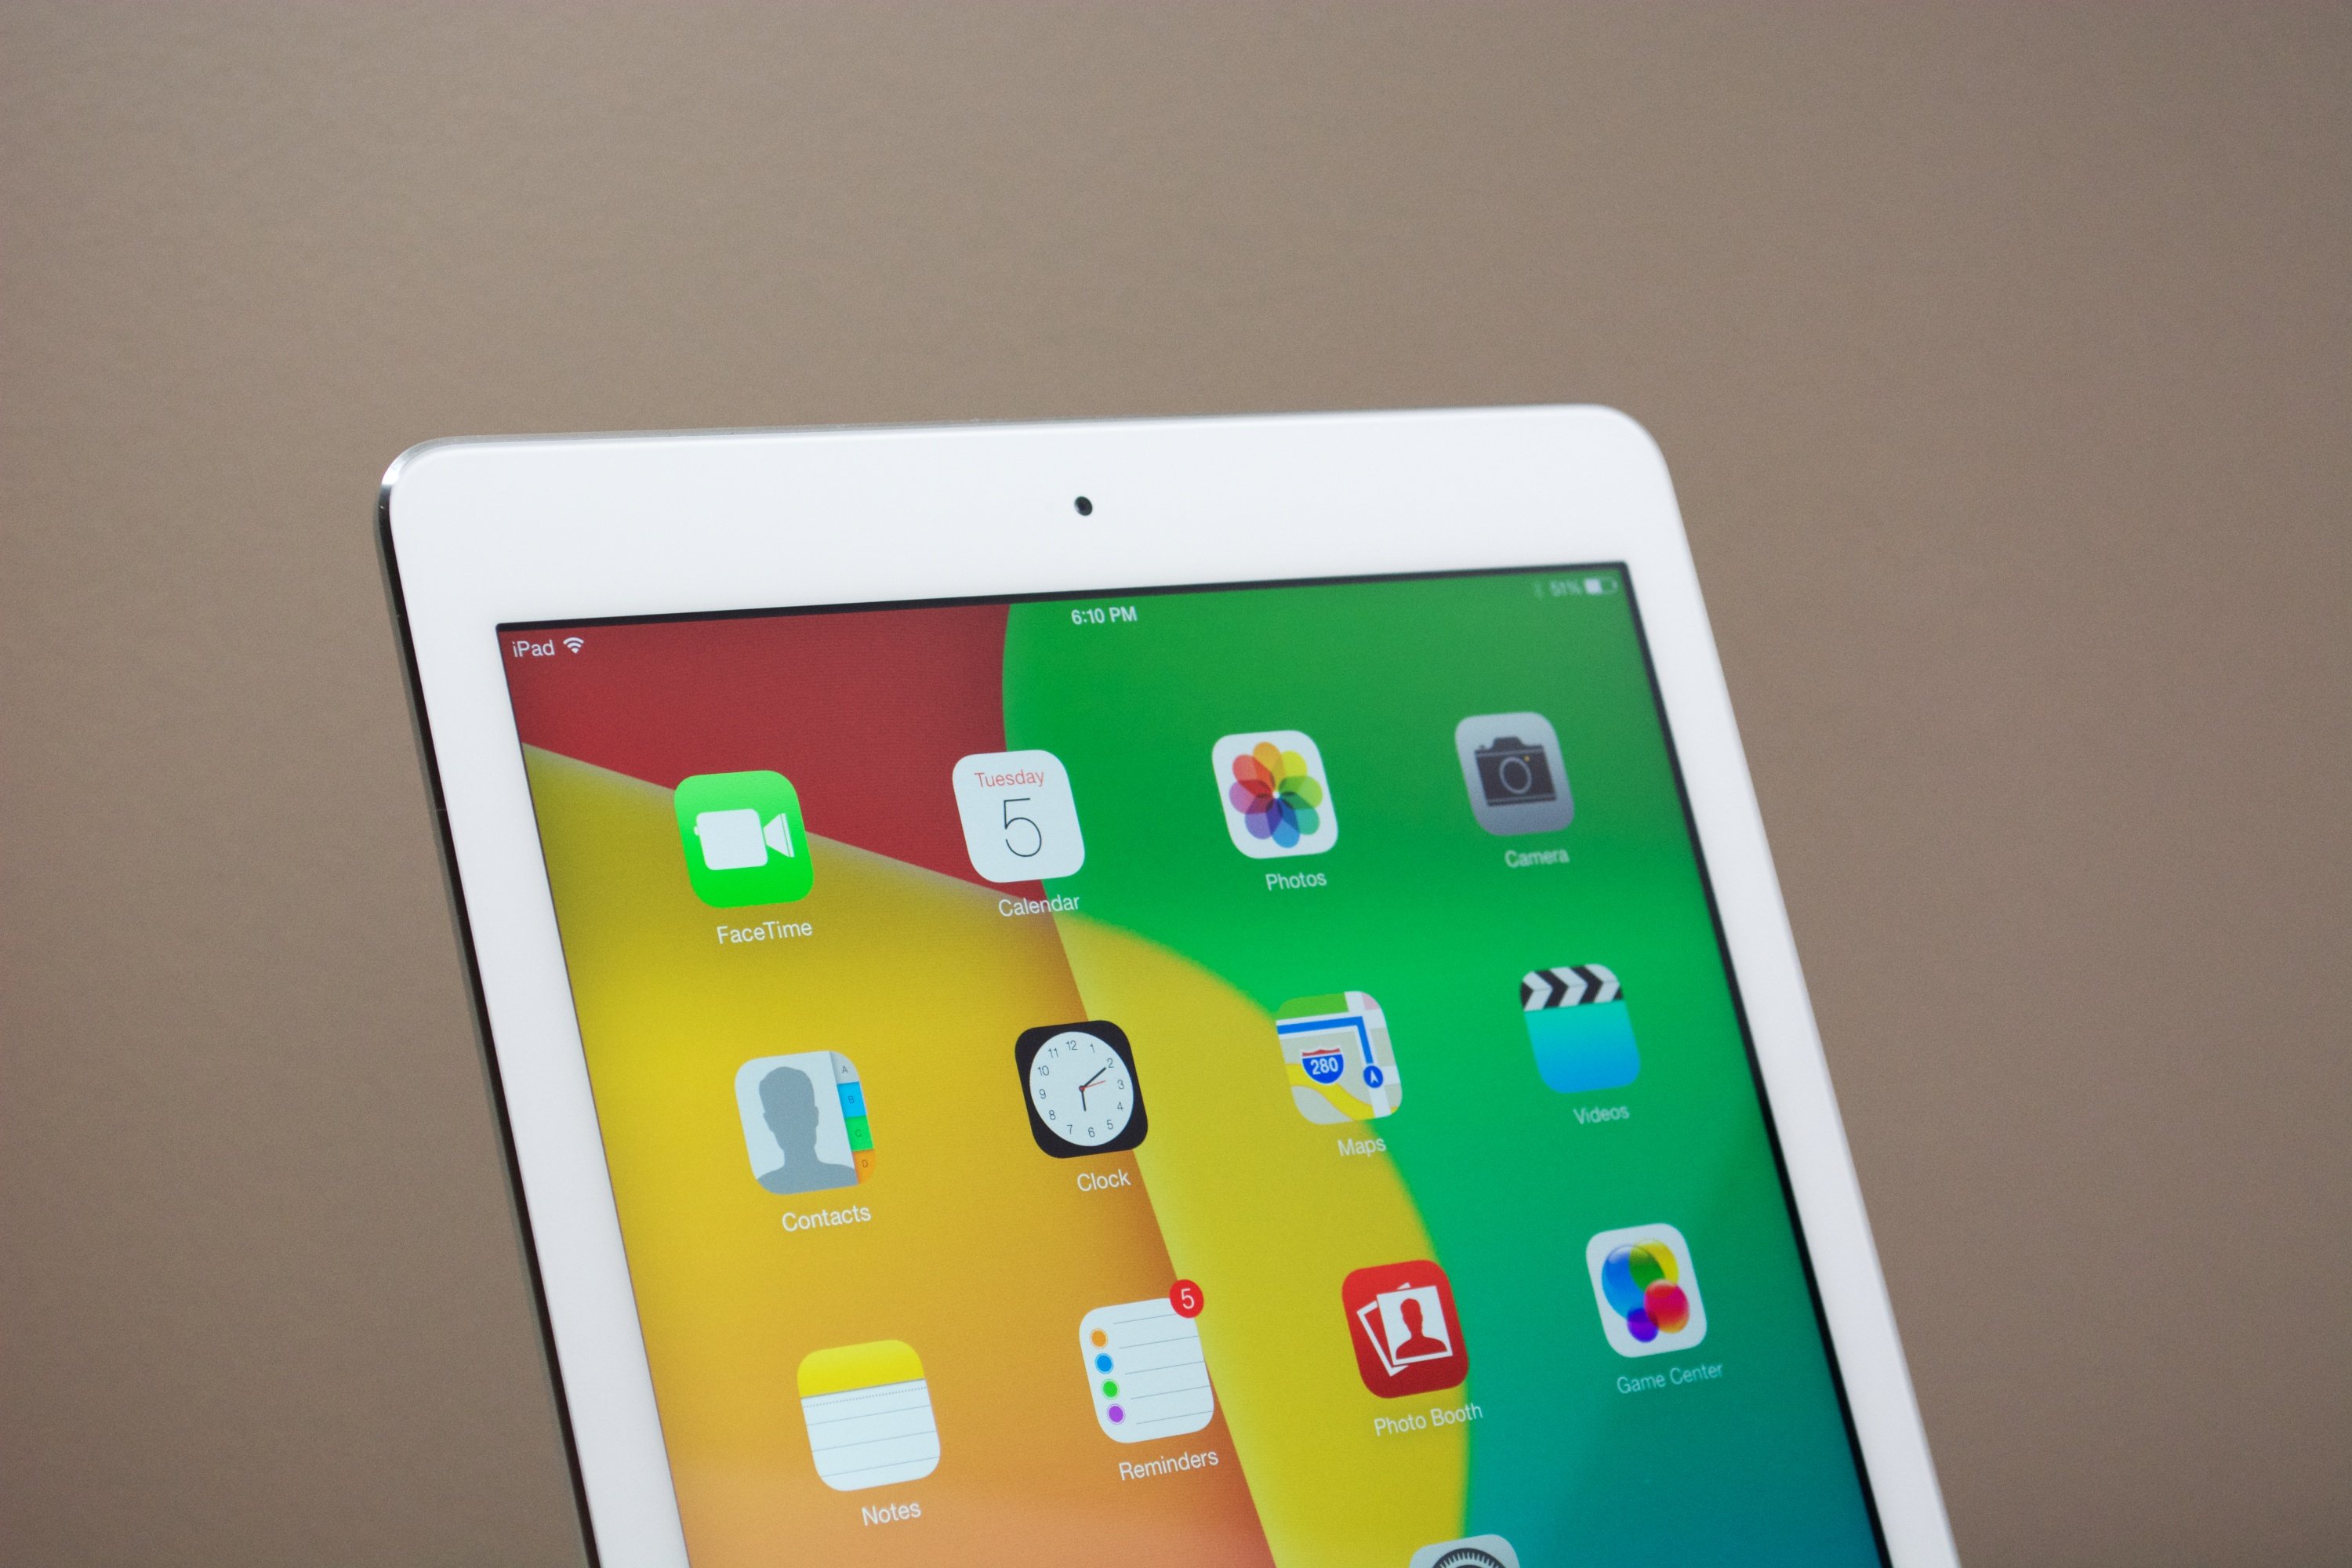 Key details emerge in a new report on the iPad Air 2014 and iPad mini Retina 2014 models.